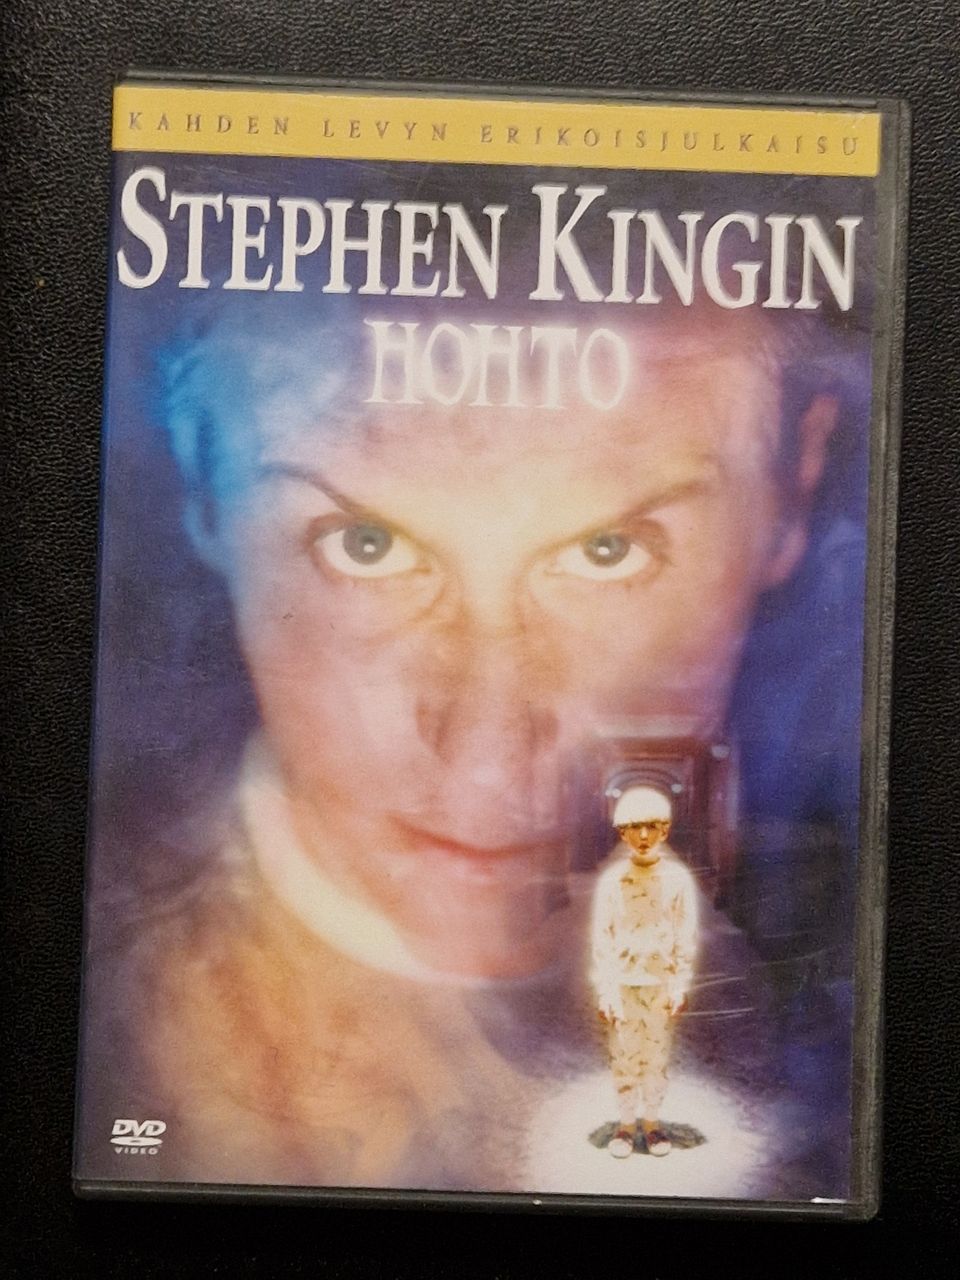 Stephen King: The Shining - Hohto FI DVD